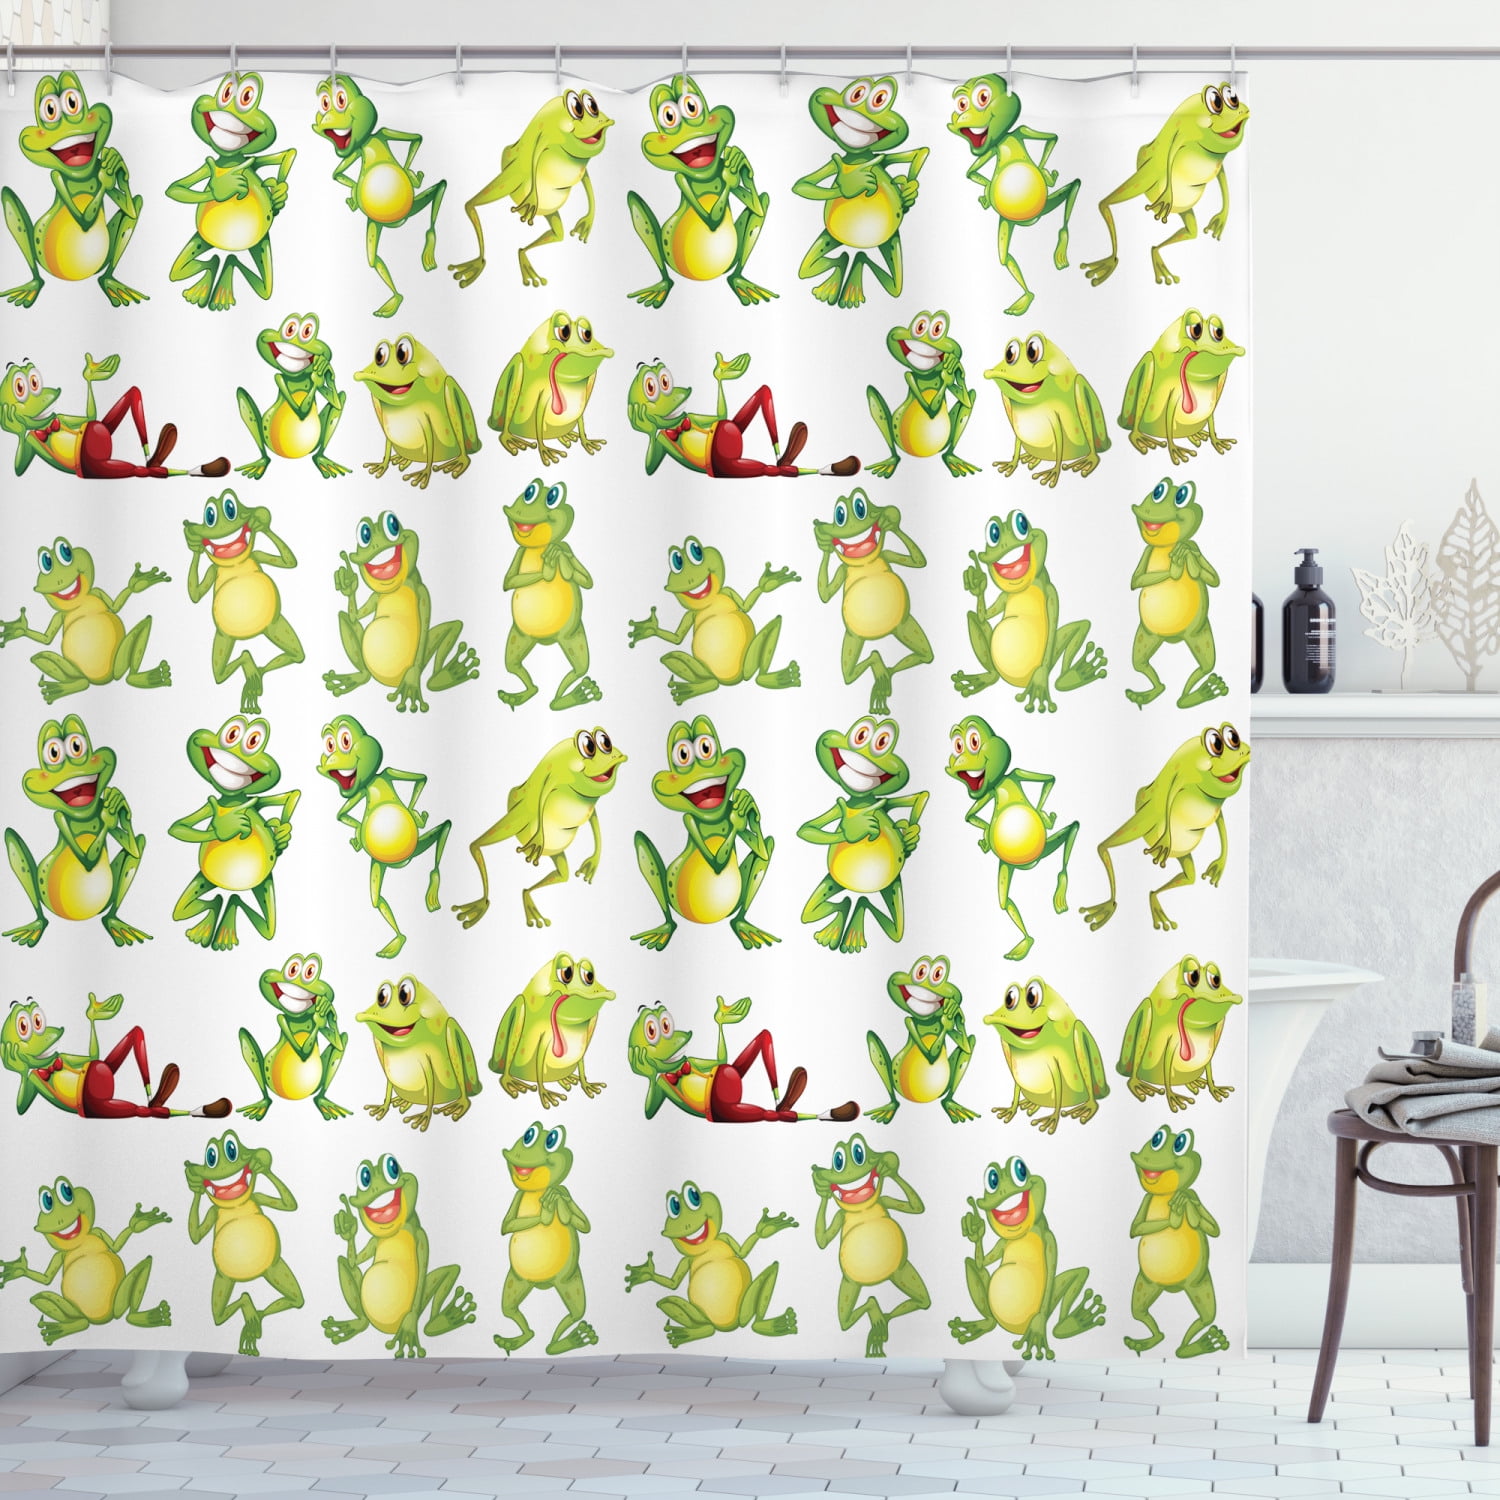 Funny cartoon frog Shower Curtain Bathroom Decor Fabric & 12hooks 71x71inches 